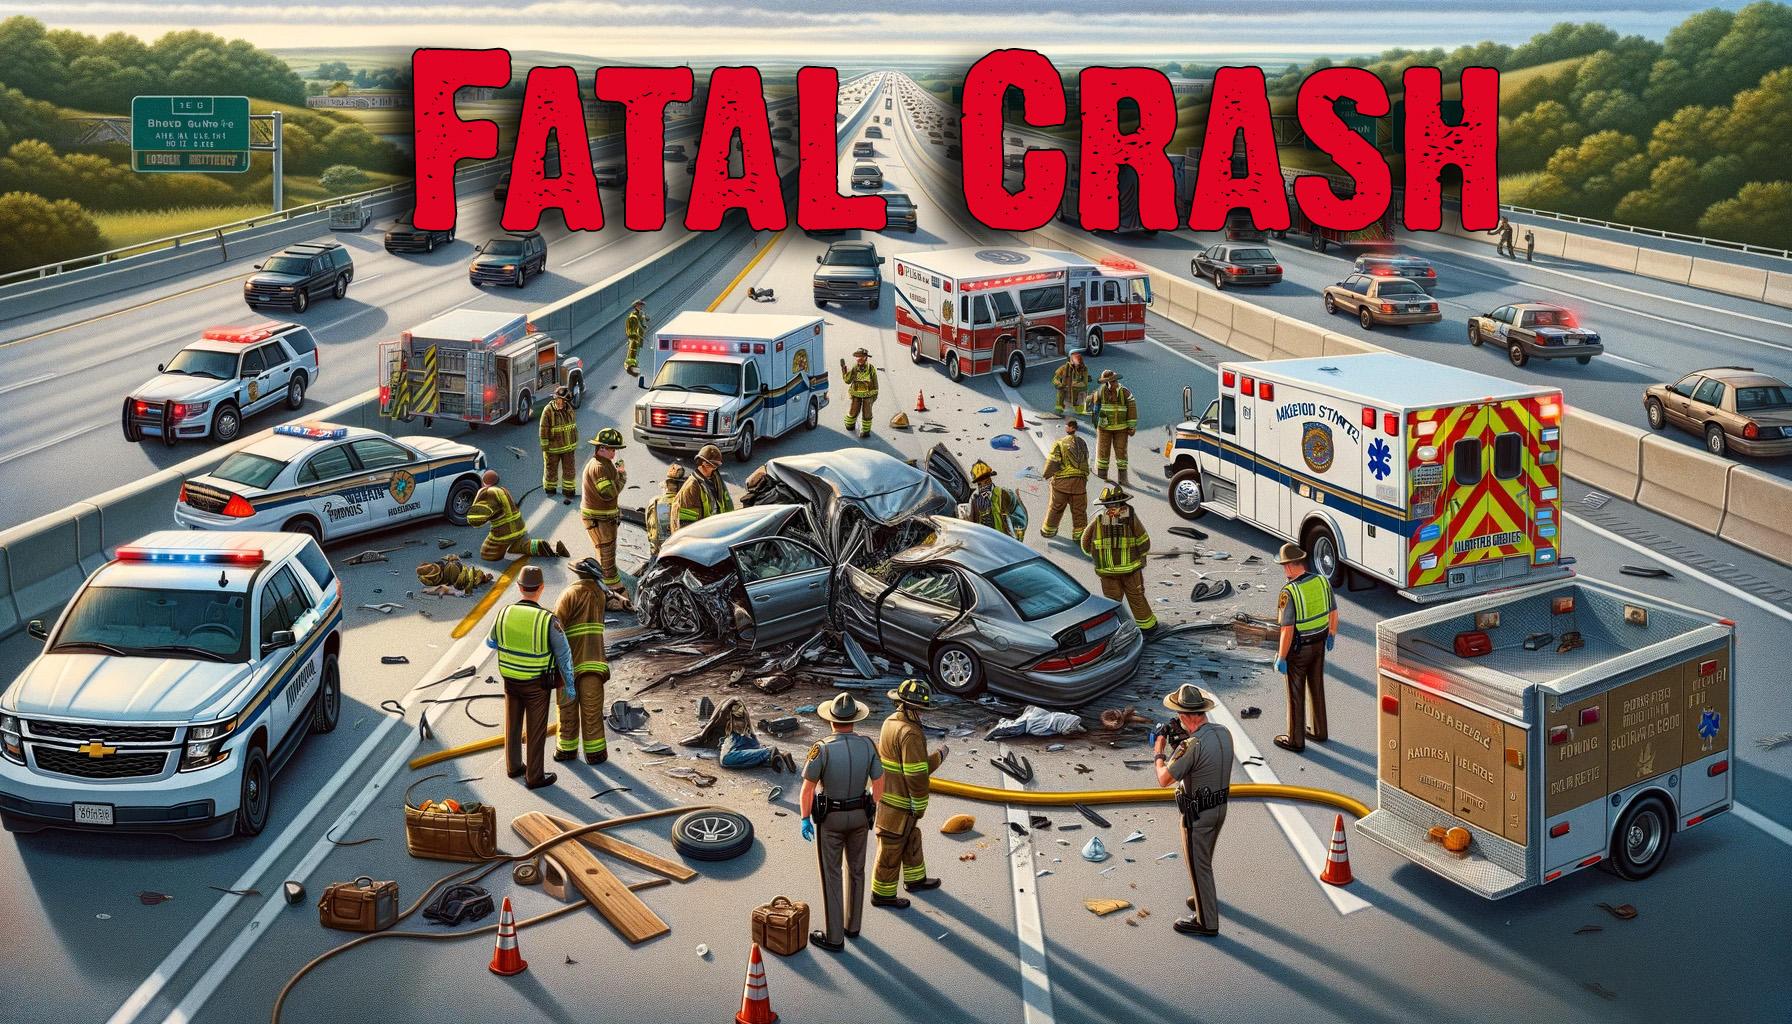 Fatal Crash News Graphic